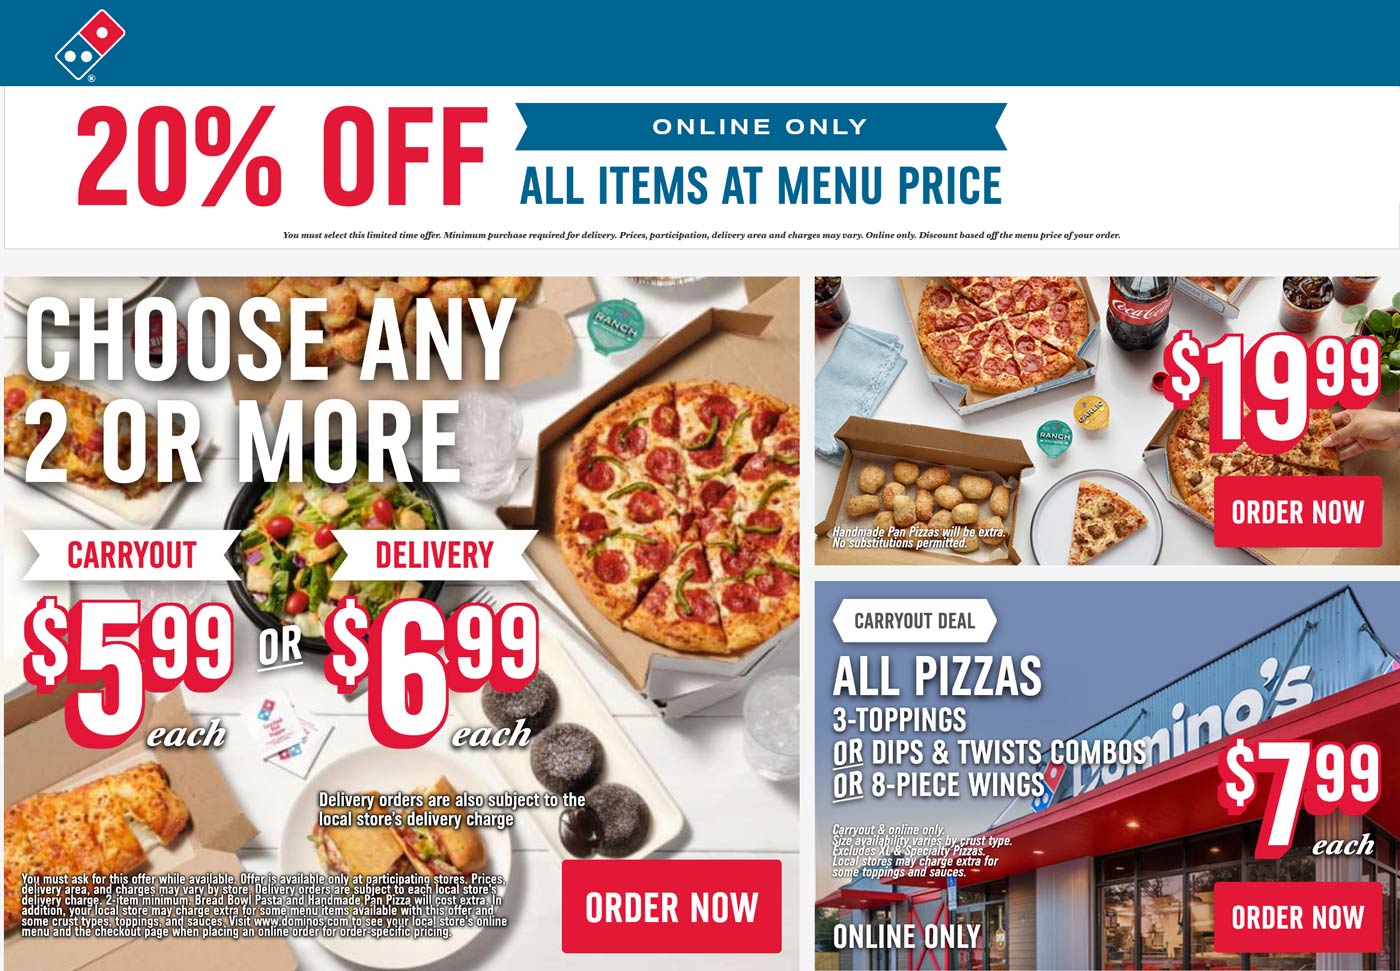 Dominos restaurants Coupon  20% off online at Dominos pizza #dominos 